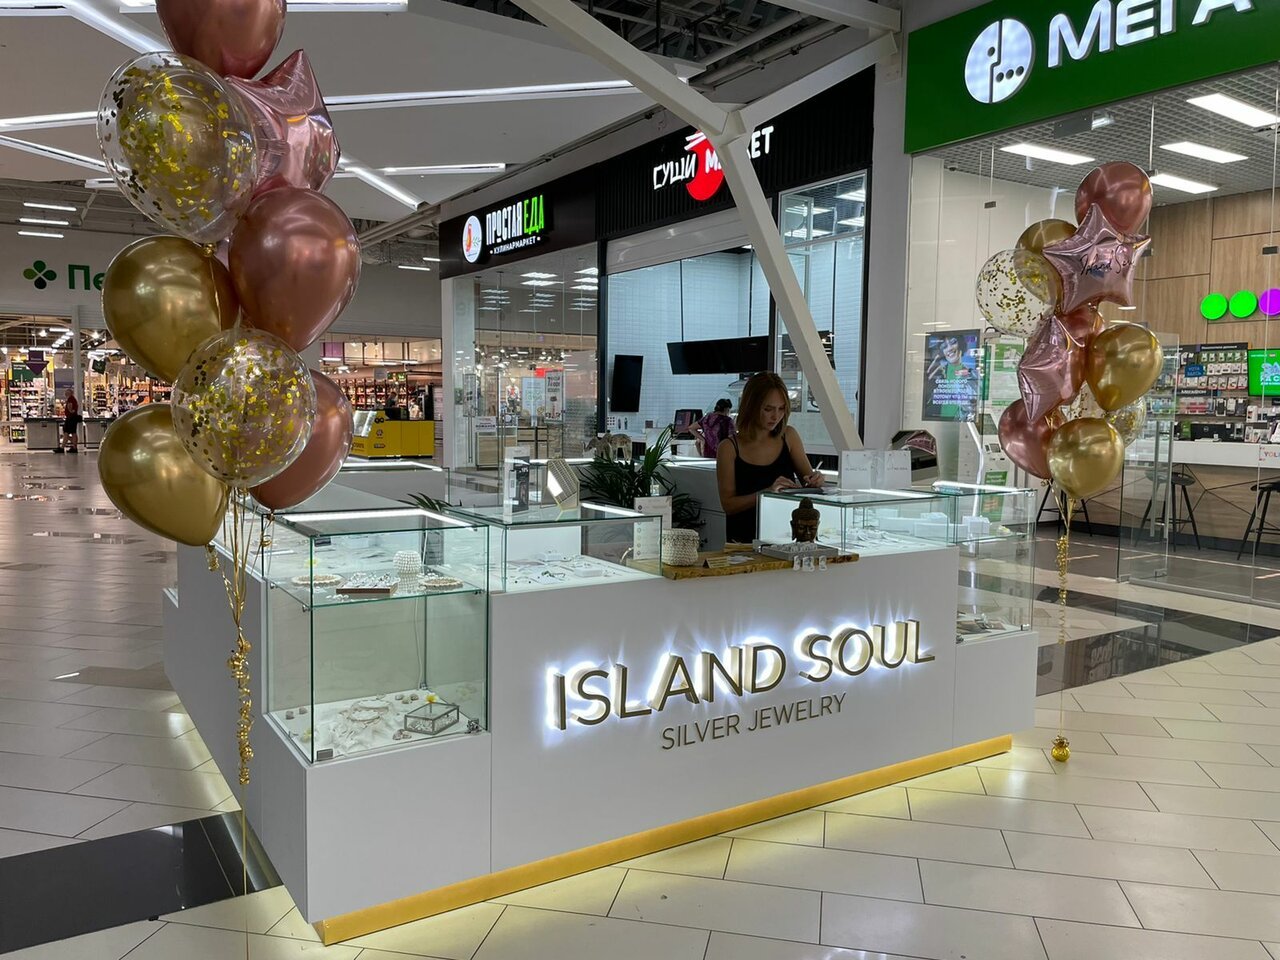 Island soul интернет магазин. Айленд соул. Island Soul бутик. Исланд соул ювелирка. Island Soul украшения интернет магазин.